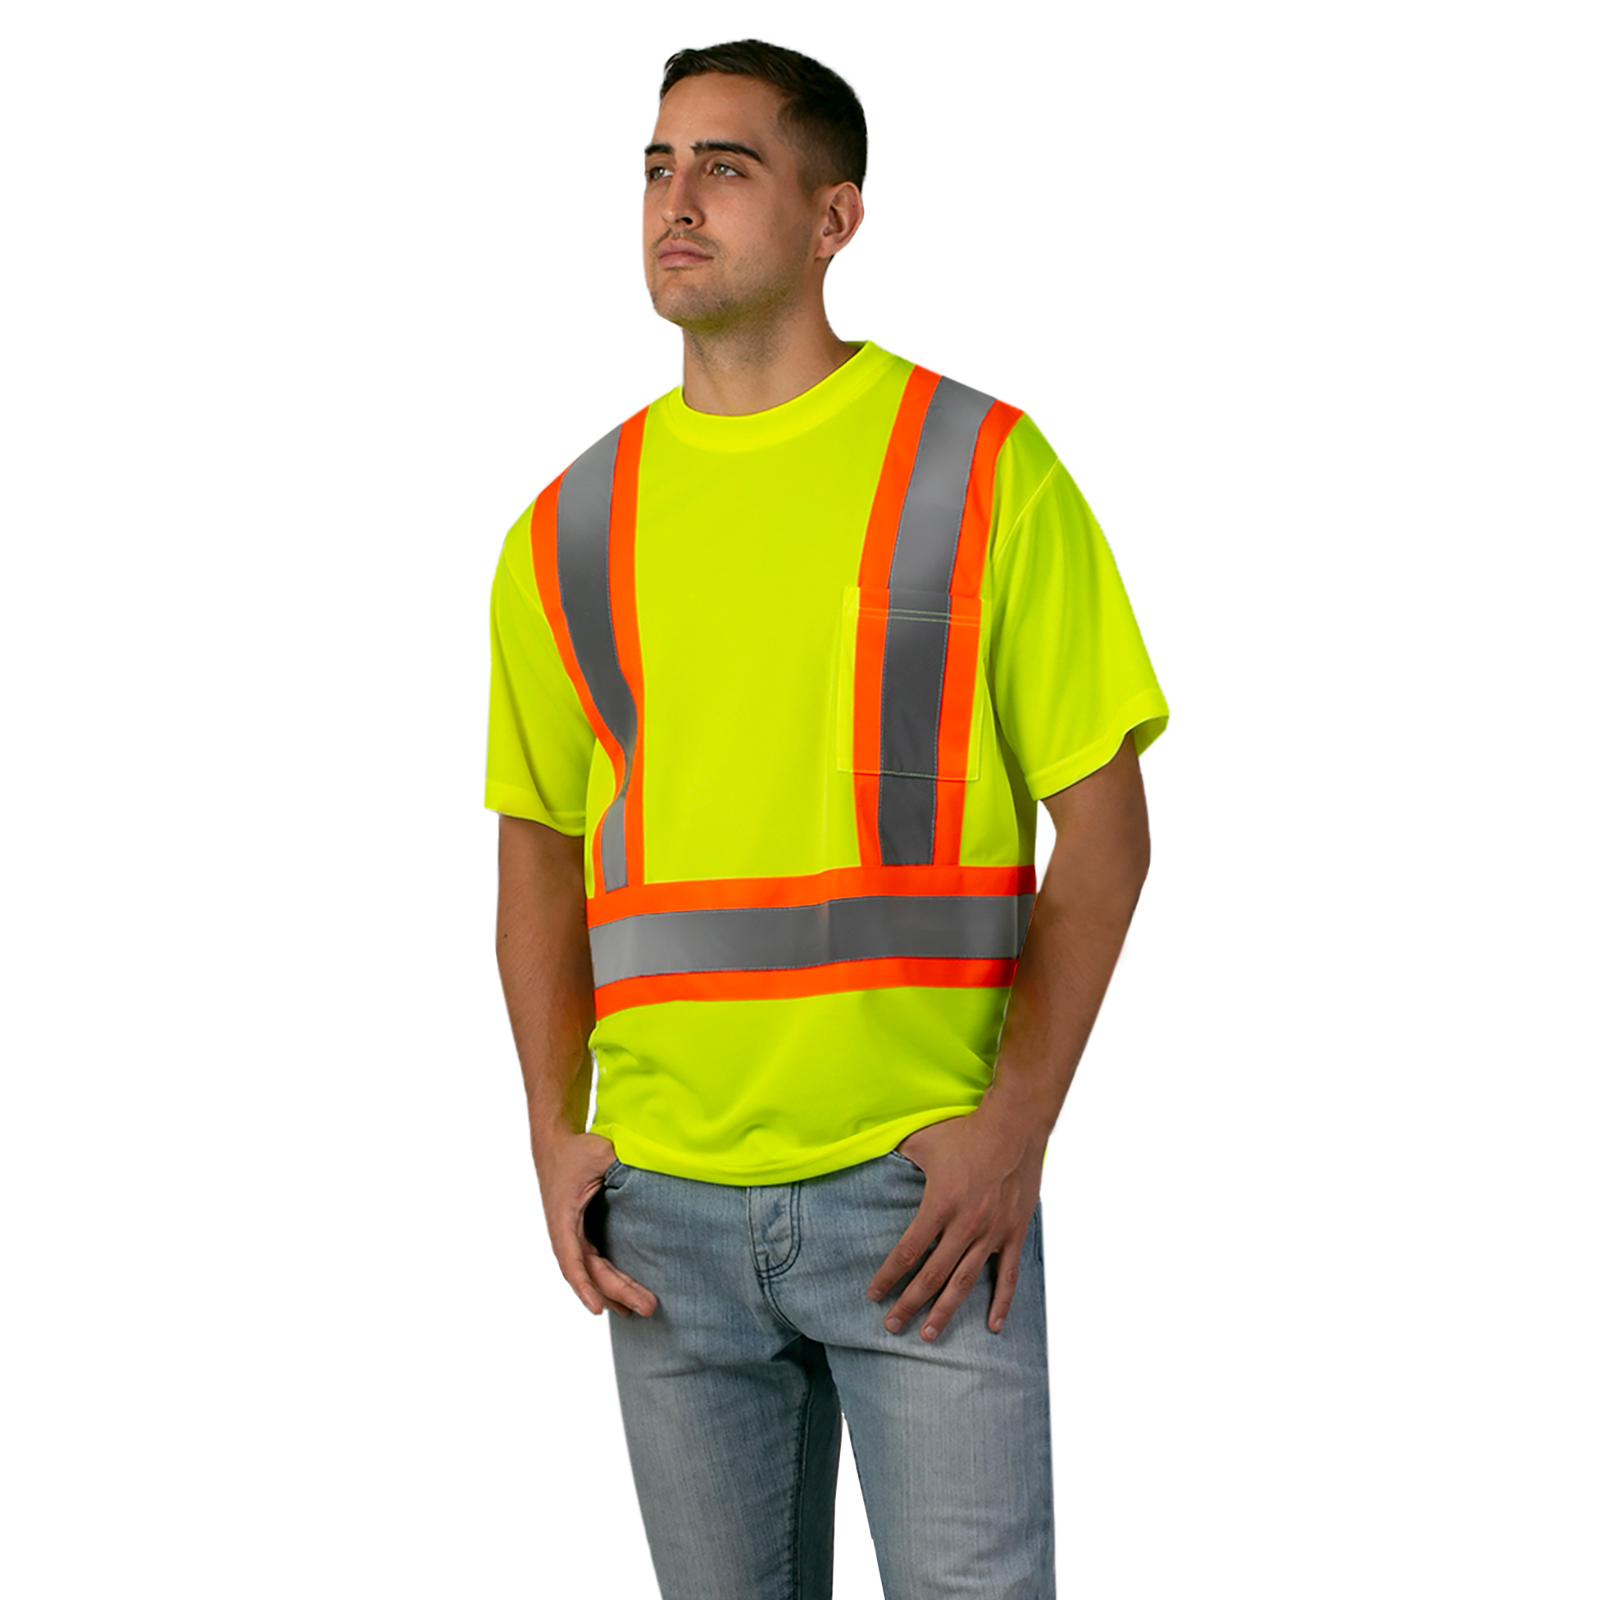 Men wearing a hi visibility lime work T shirt